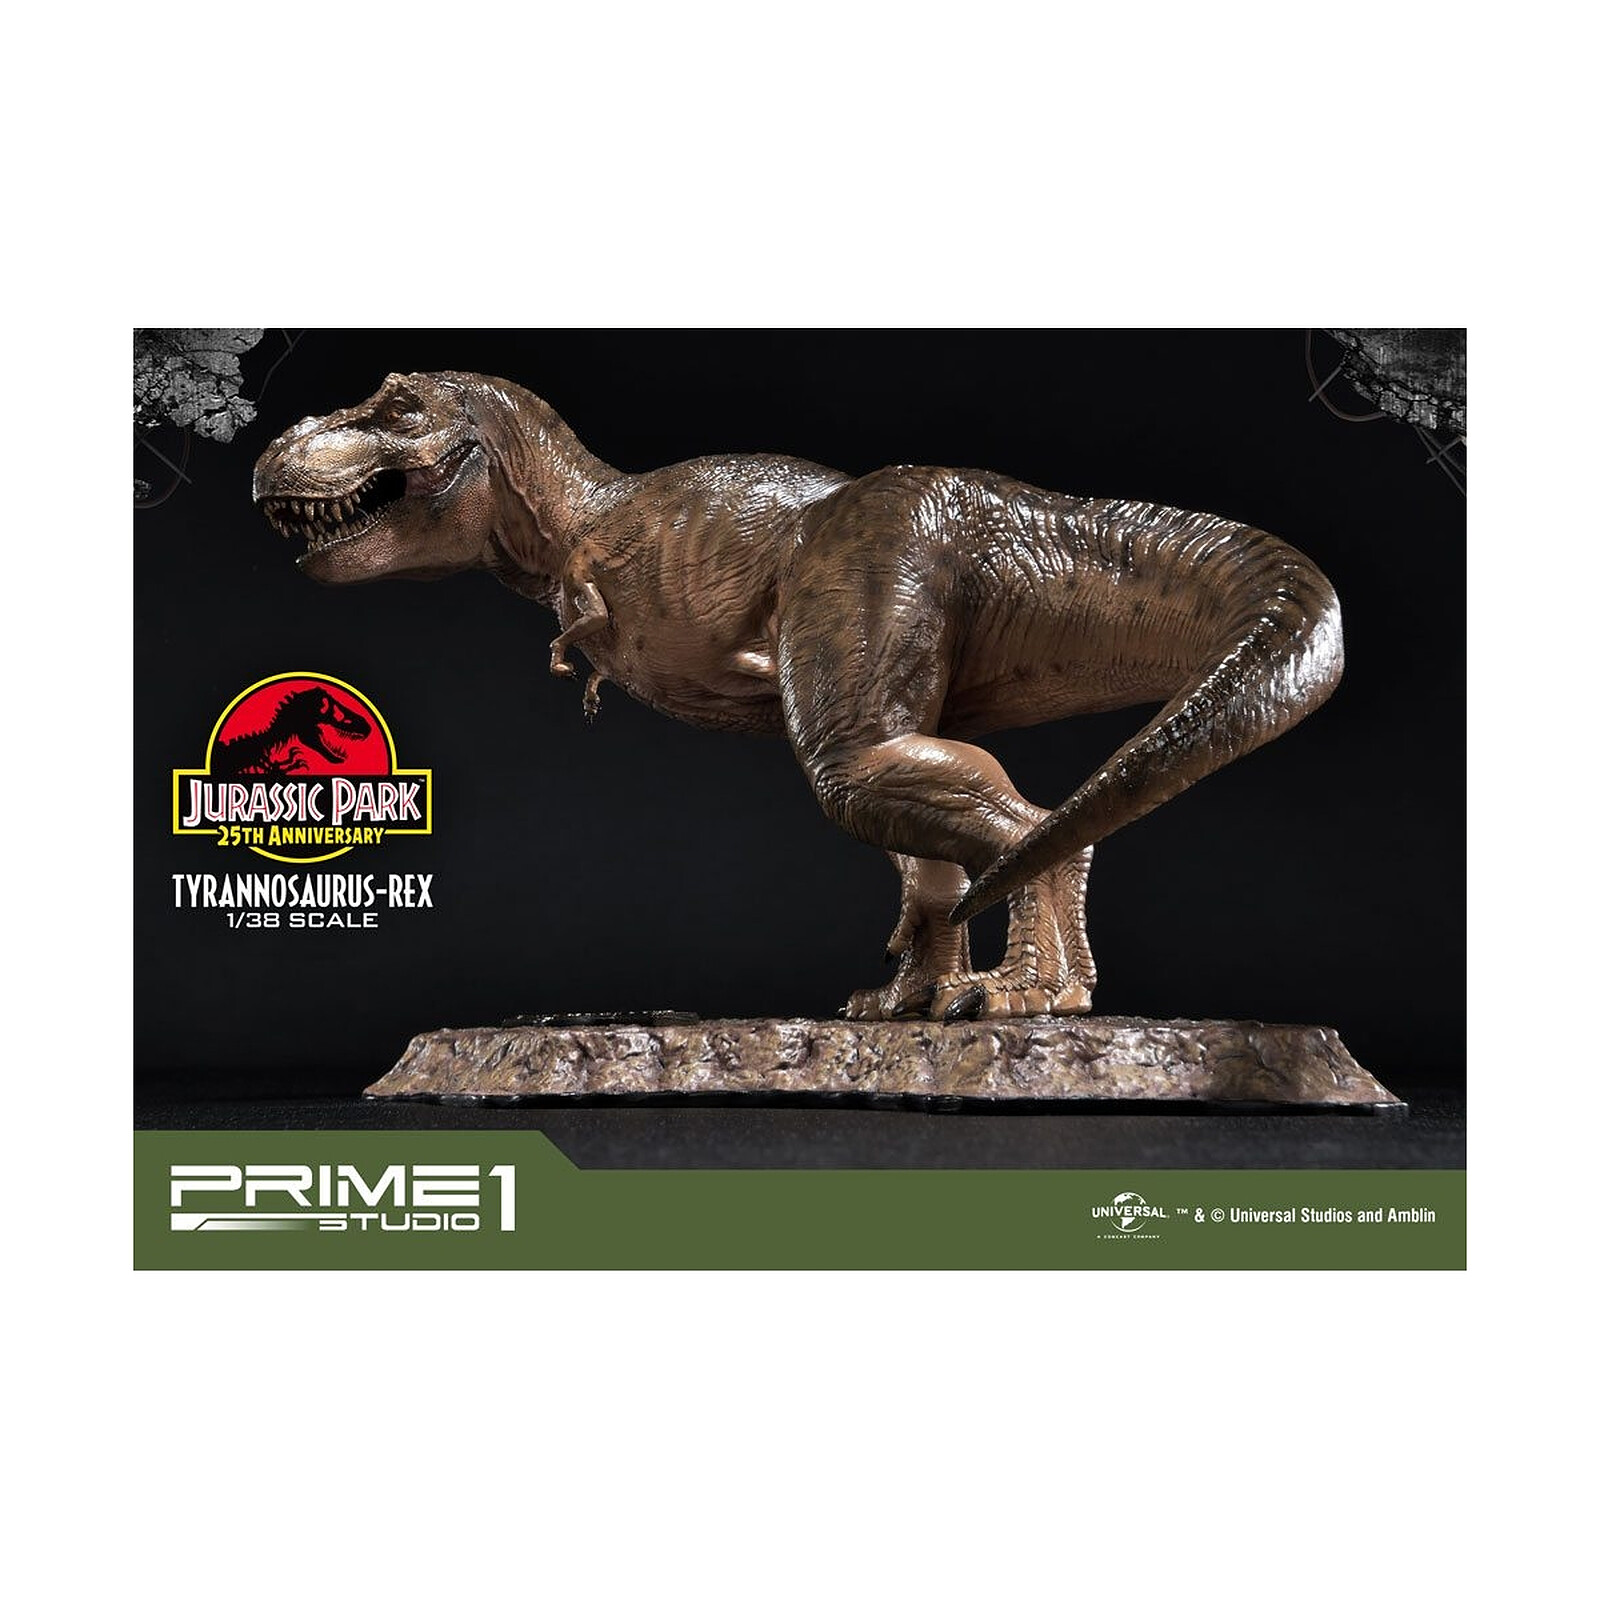 Jurassic Park - Statuette Prime Collectibles 1/38 Tyrannosaurus